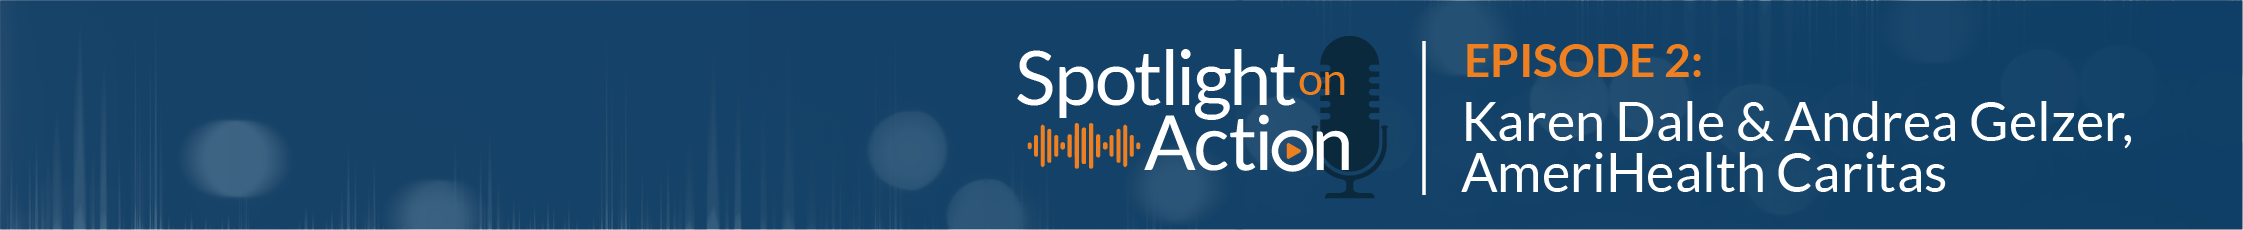 Spotlight on Action, Episode 2: Andrea Gelzer & Karen Dale, AmeriHealth Caritas